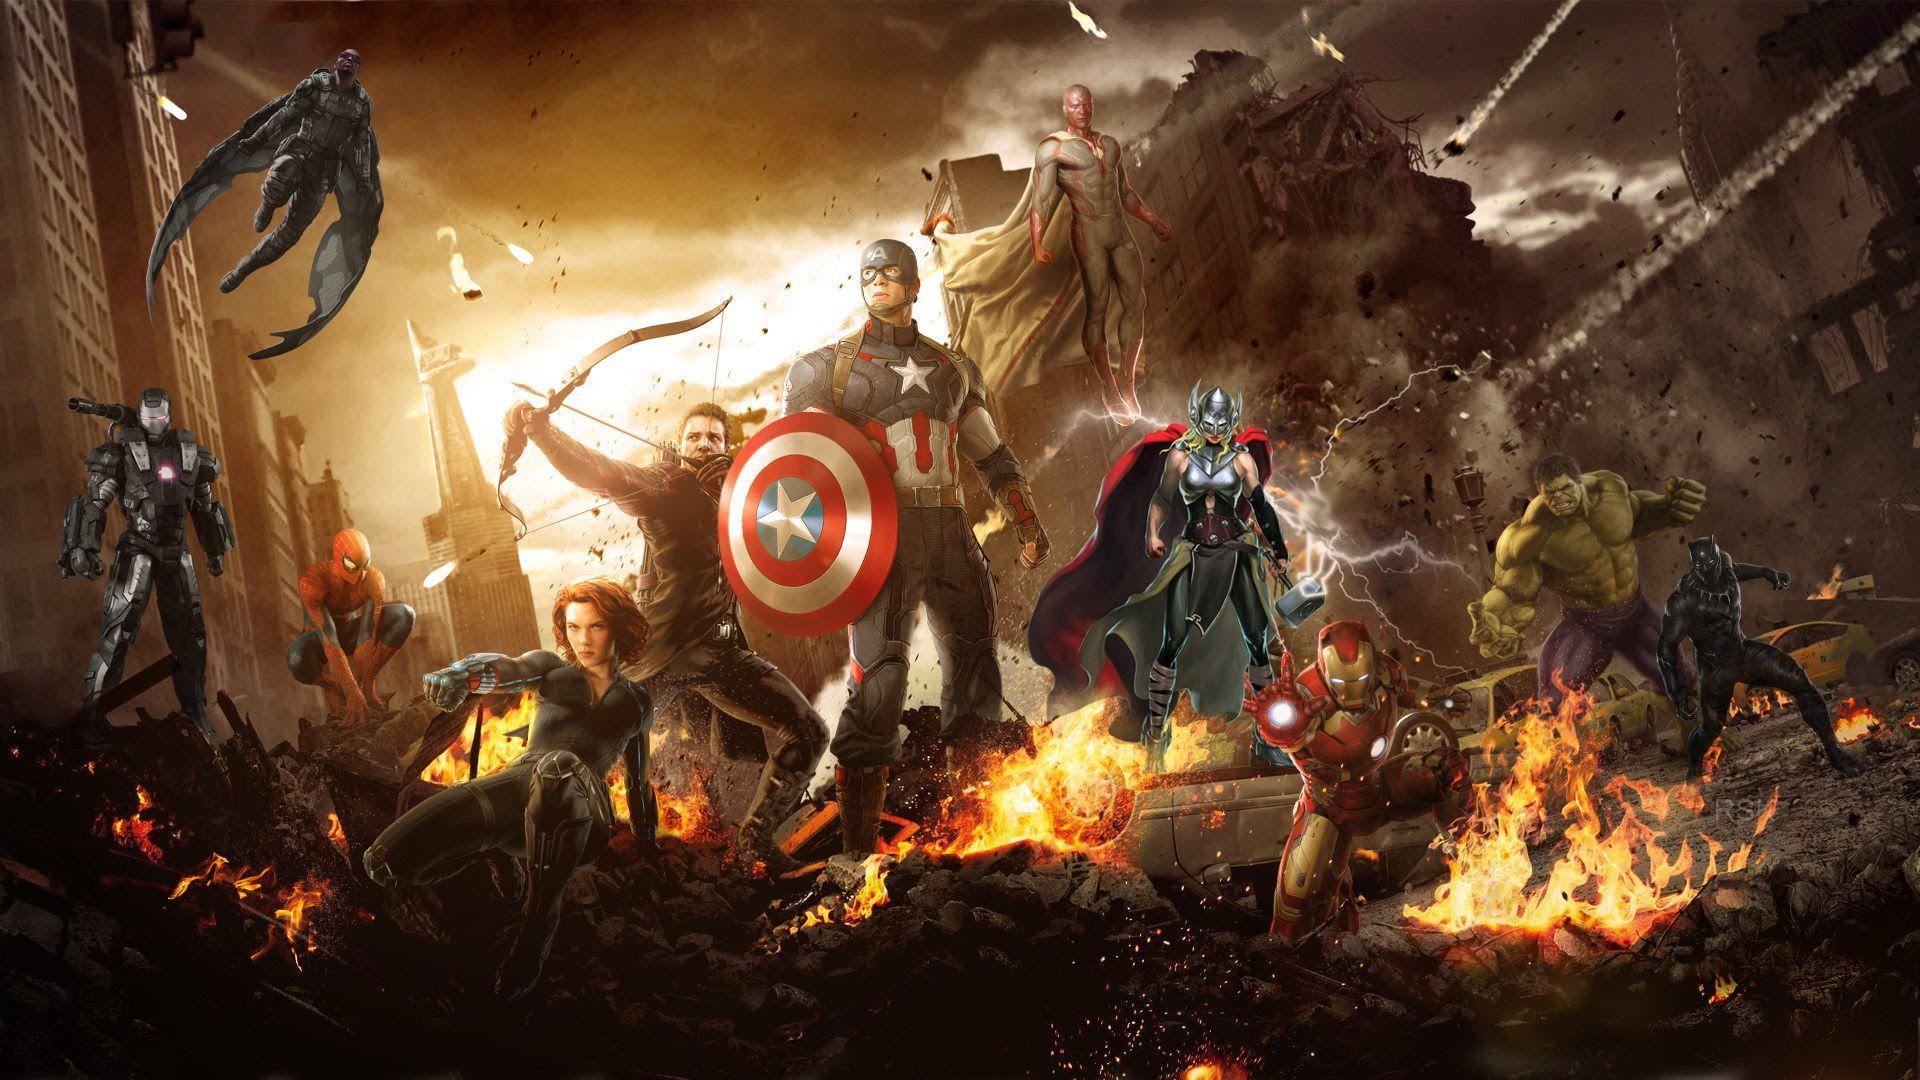 Captain America: Civil War Chrome Theme and Wallpaper